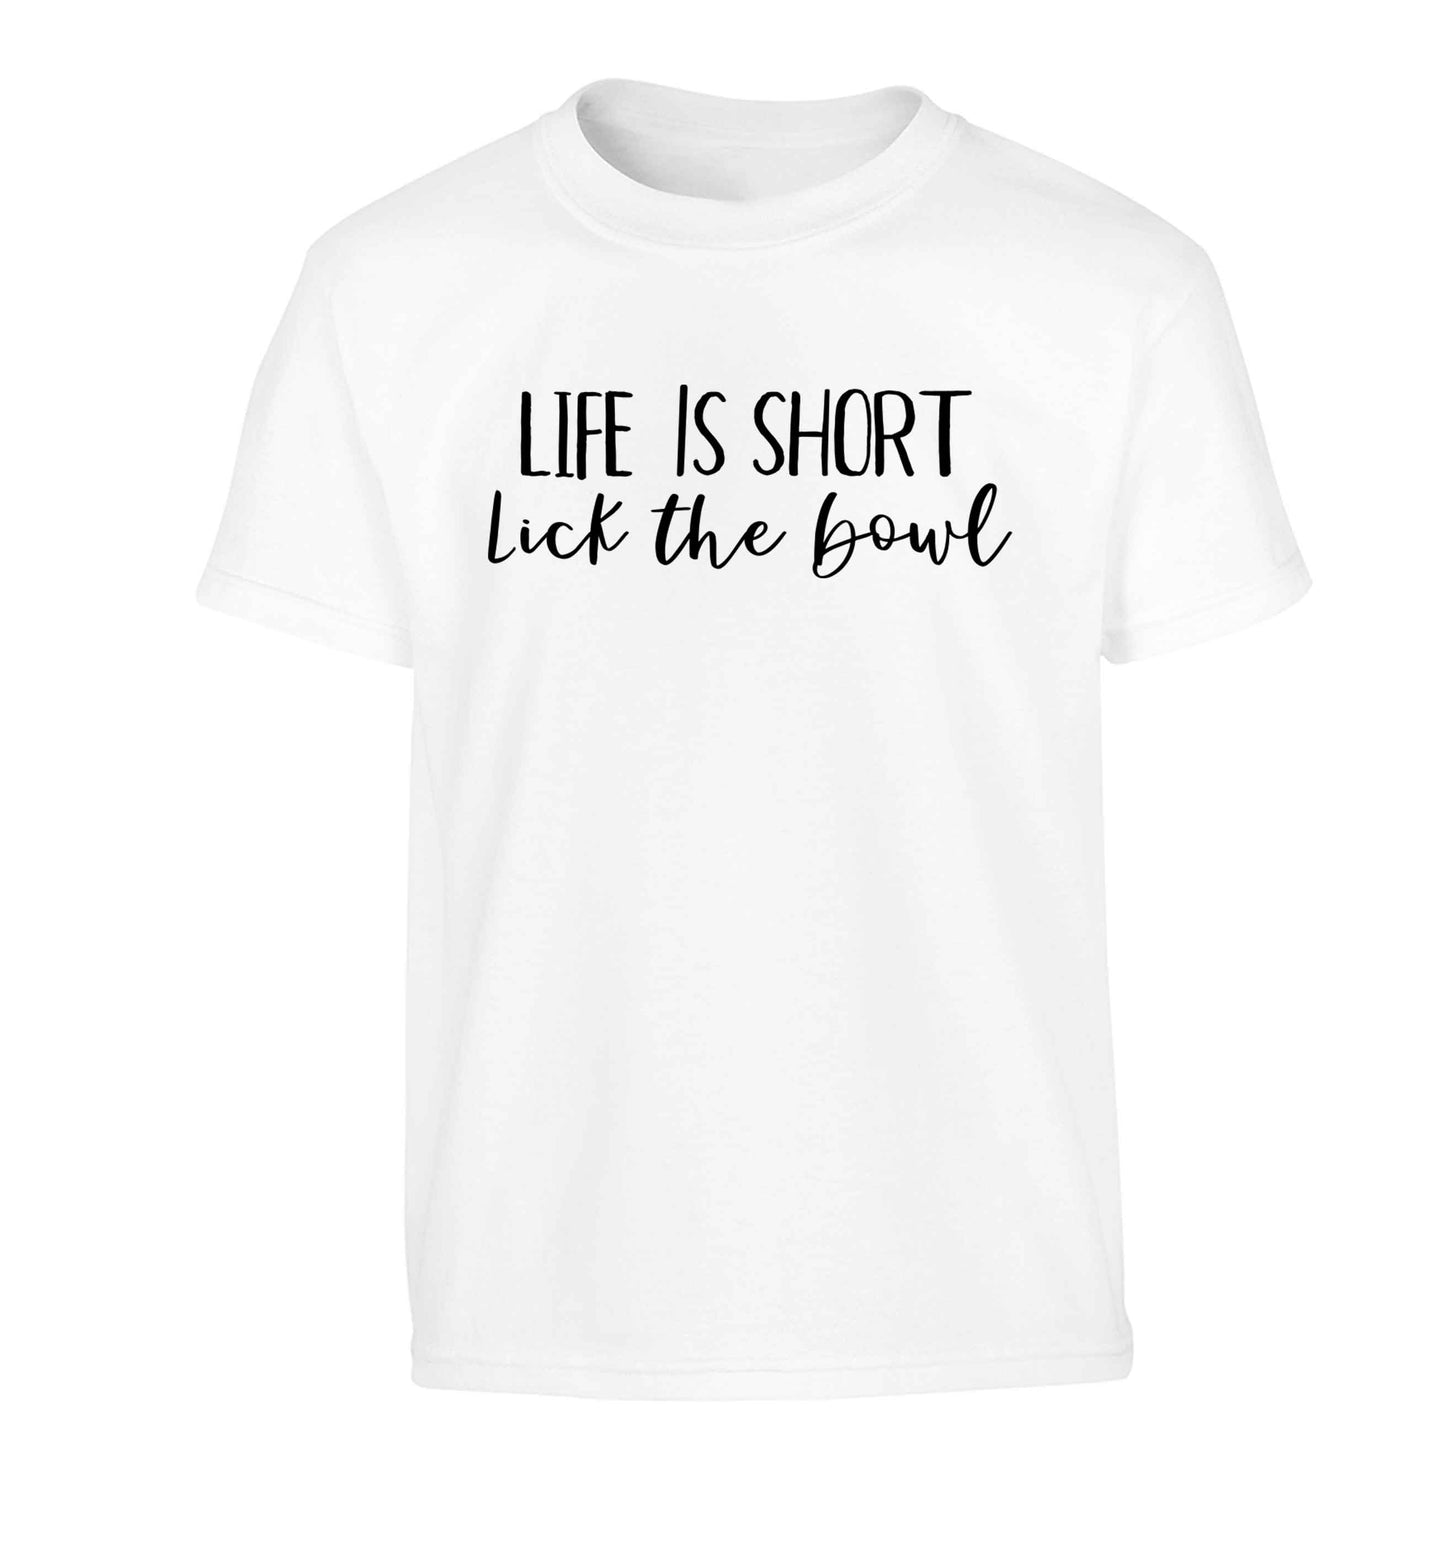 Life is short lick the bowl Children's white Tshirt 12-13 Years